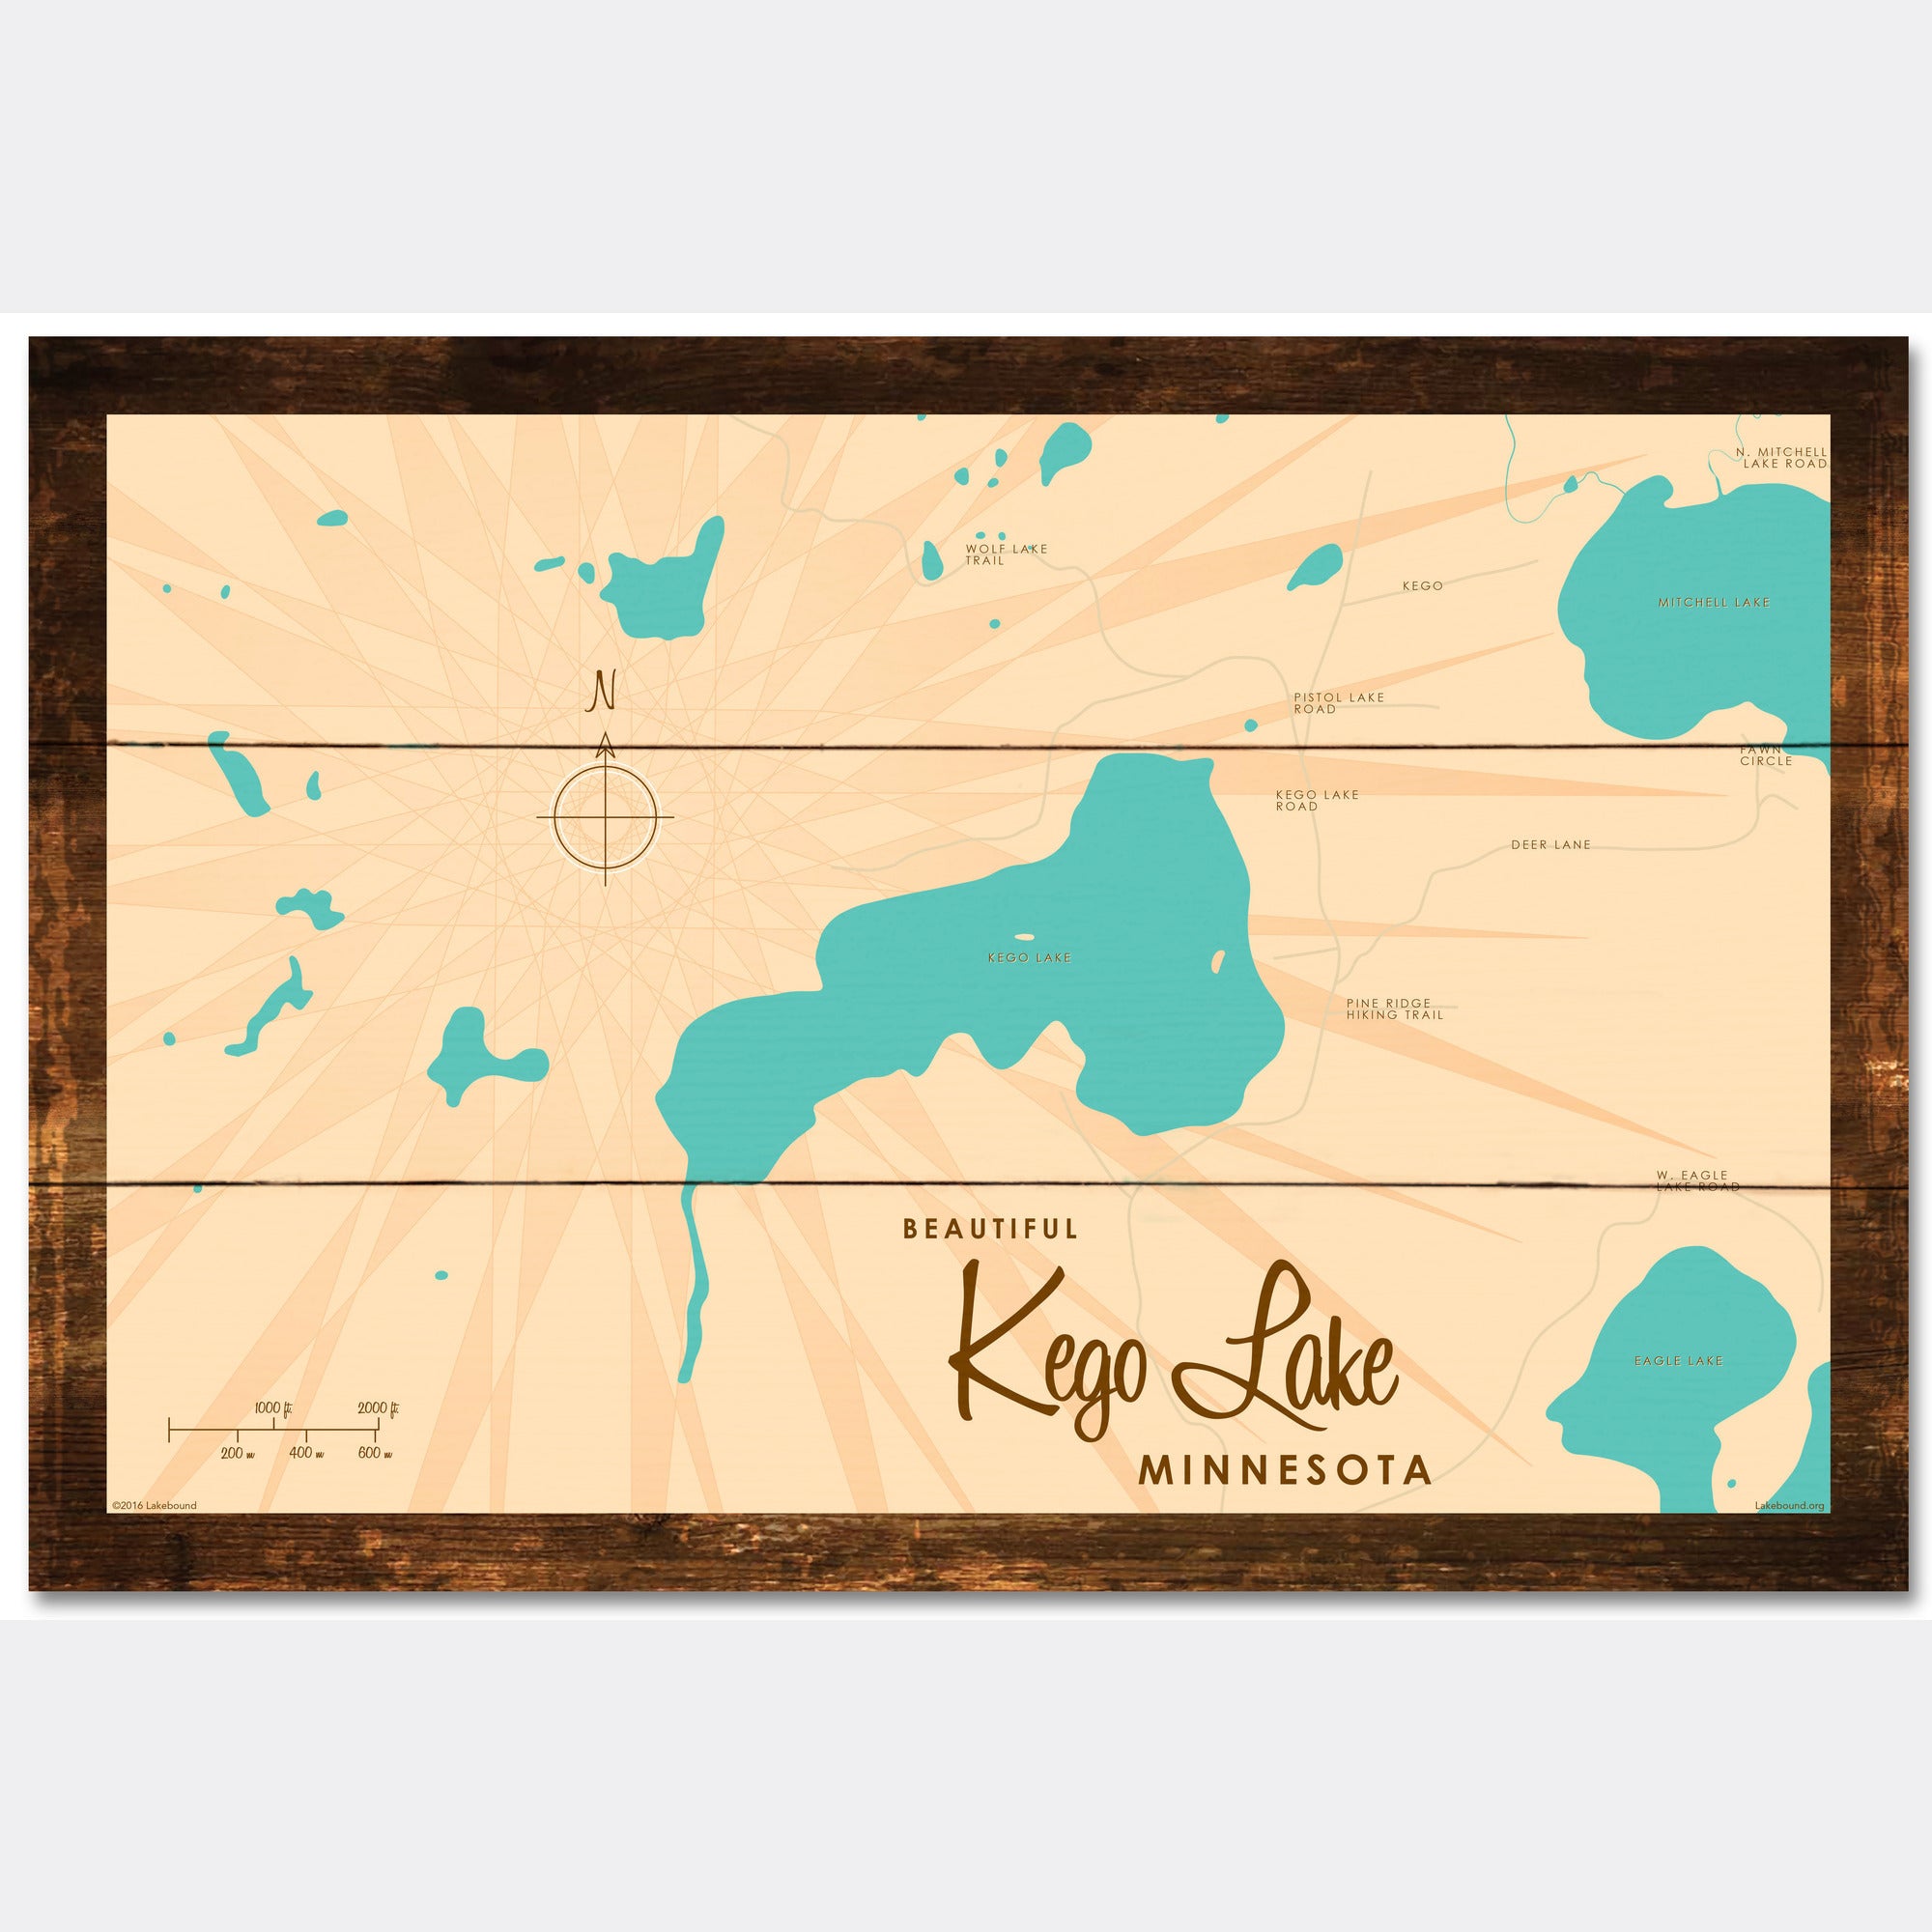 Kego Lake Minnesota, Rustic Wood Sign Map Art